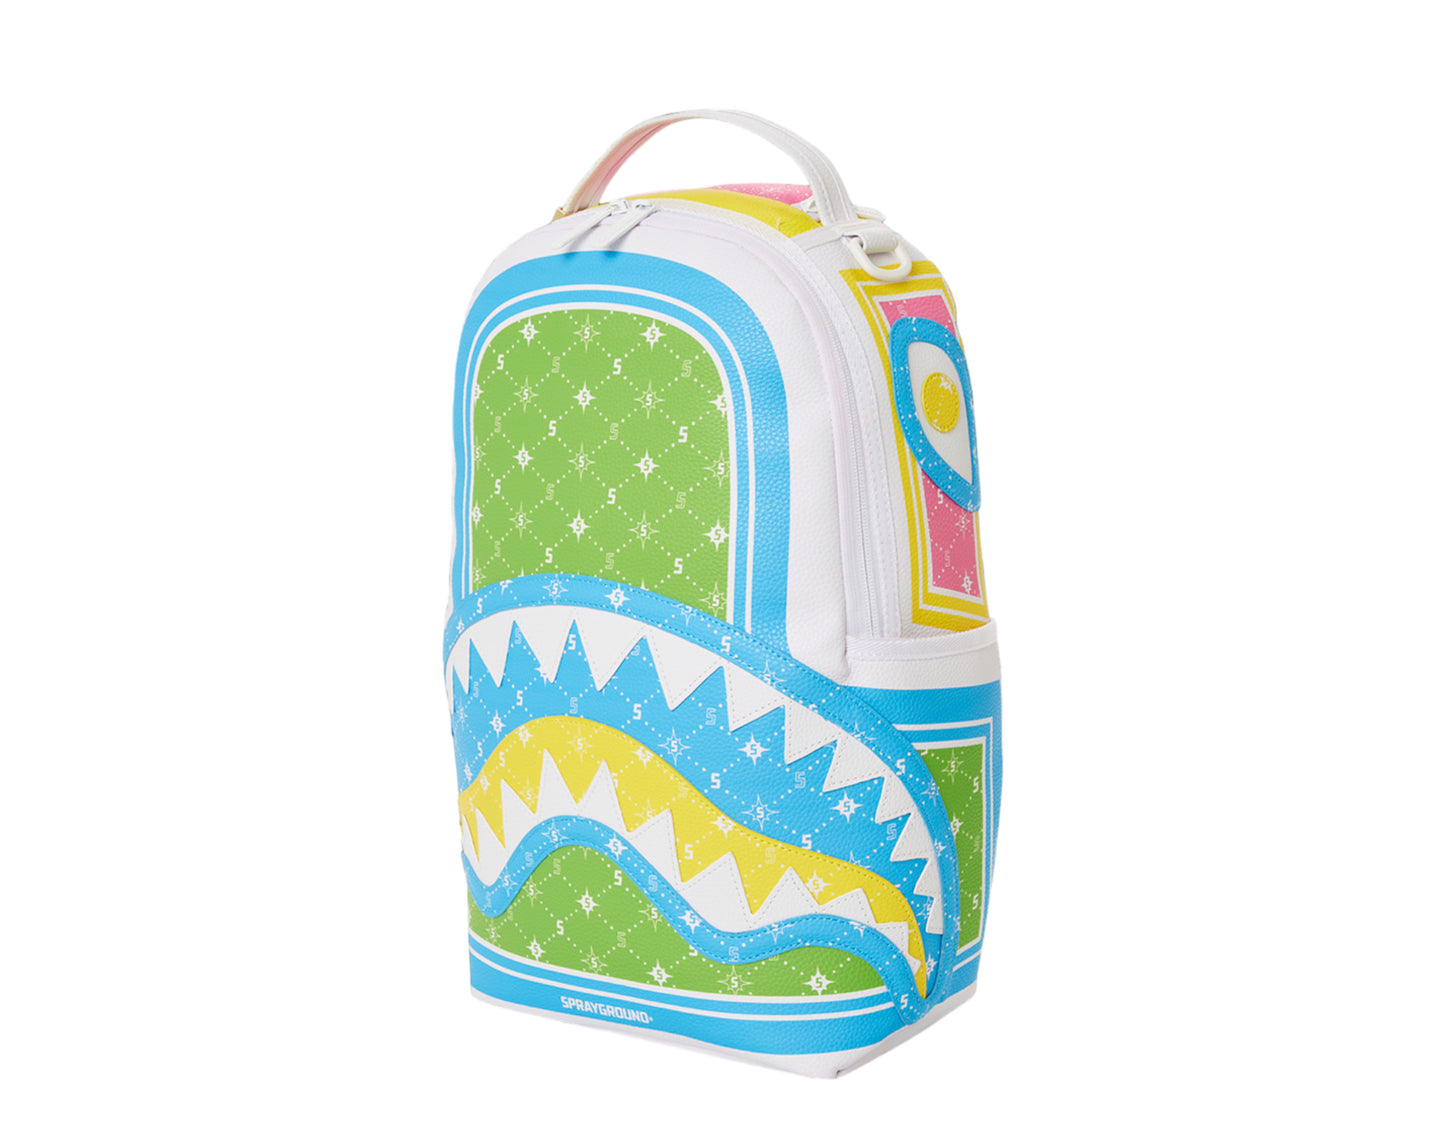 Sprayground shark mouth print backpack - White